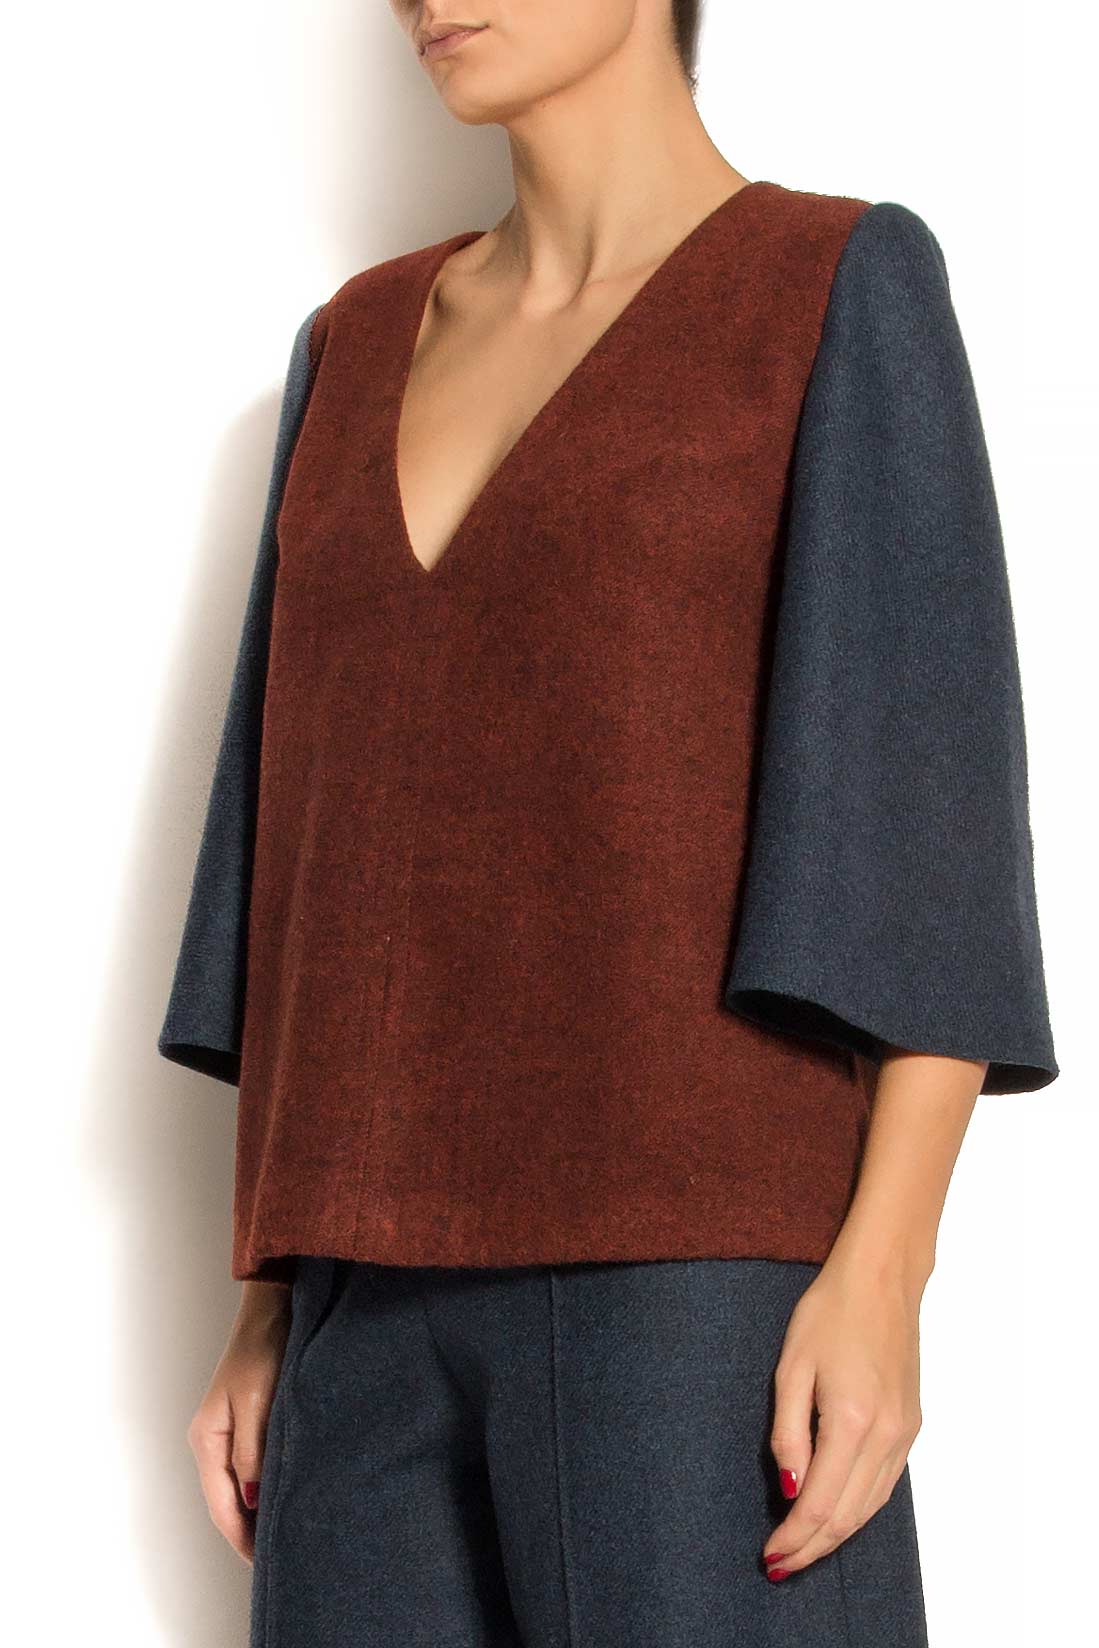 Bluza bicolora din lana ATU Body Couture imagine 1